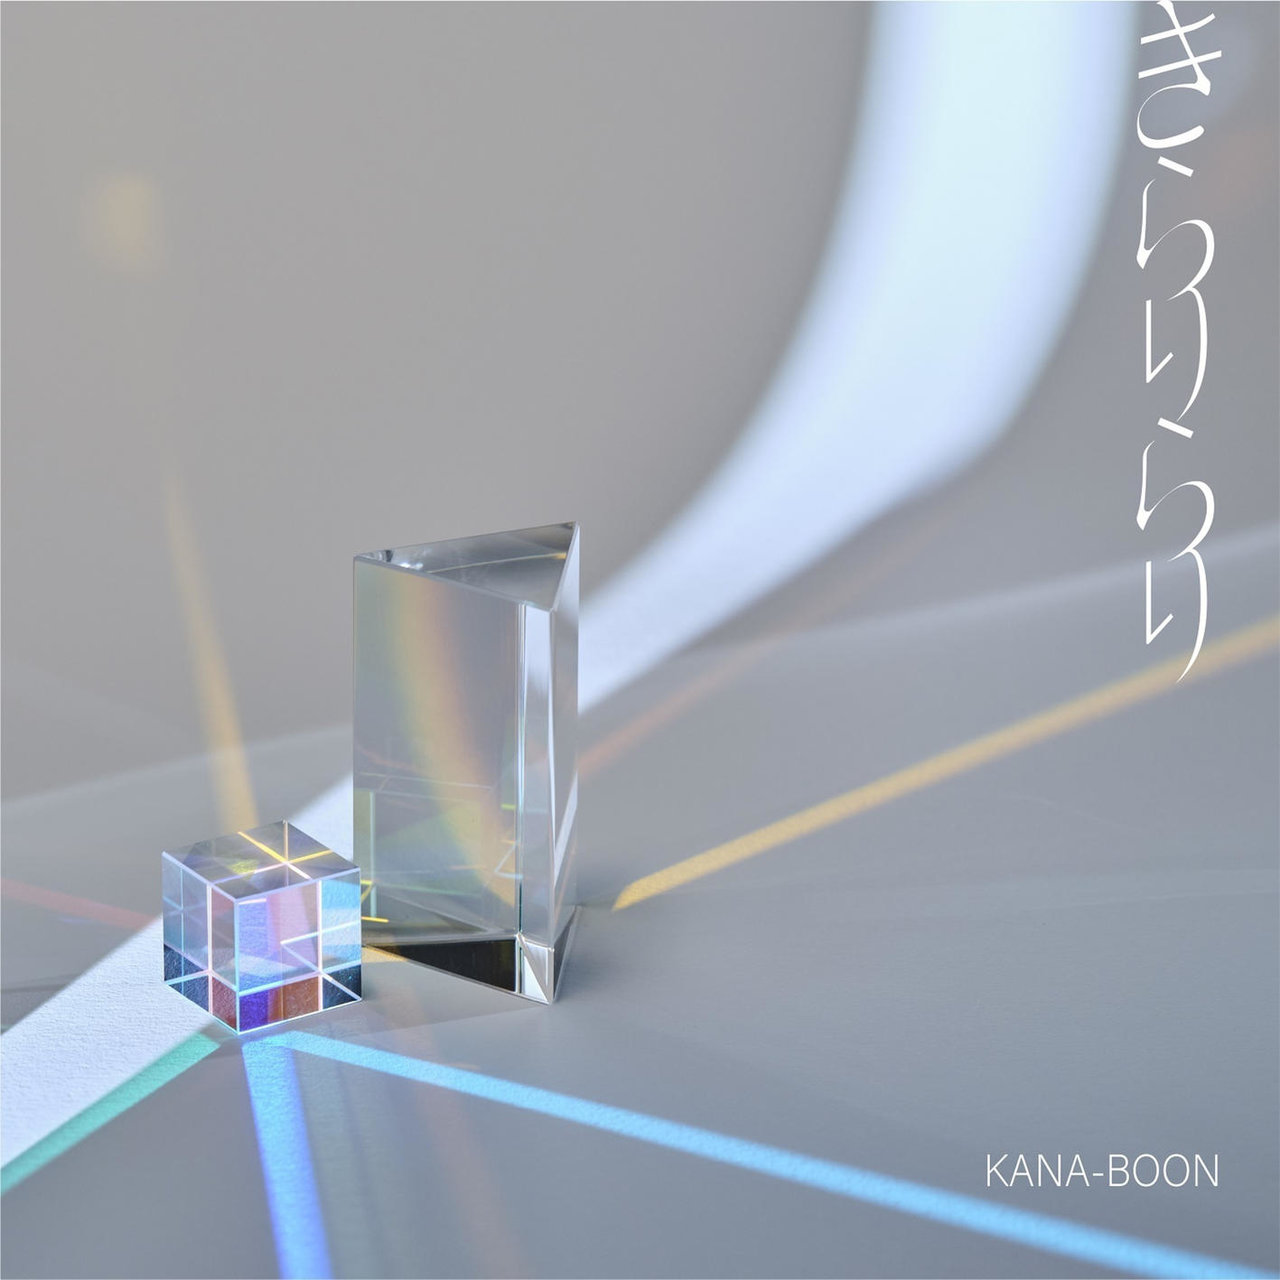 KANA-BOON — Kirarirari cover artwork